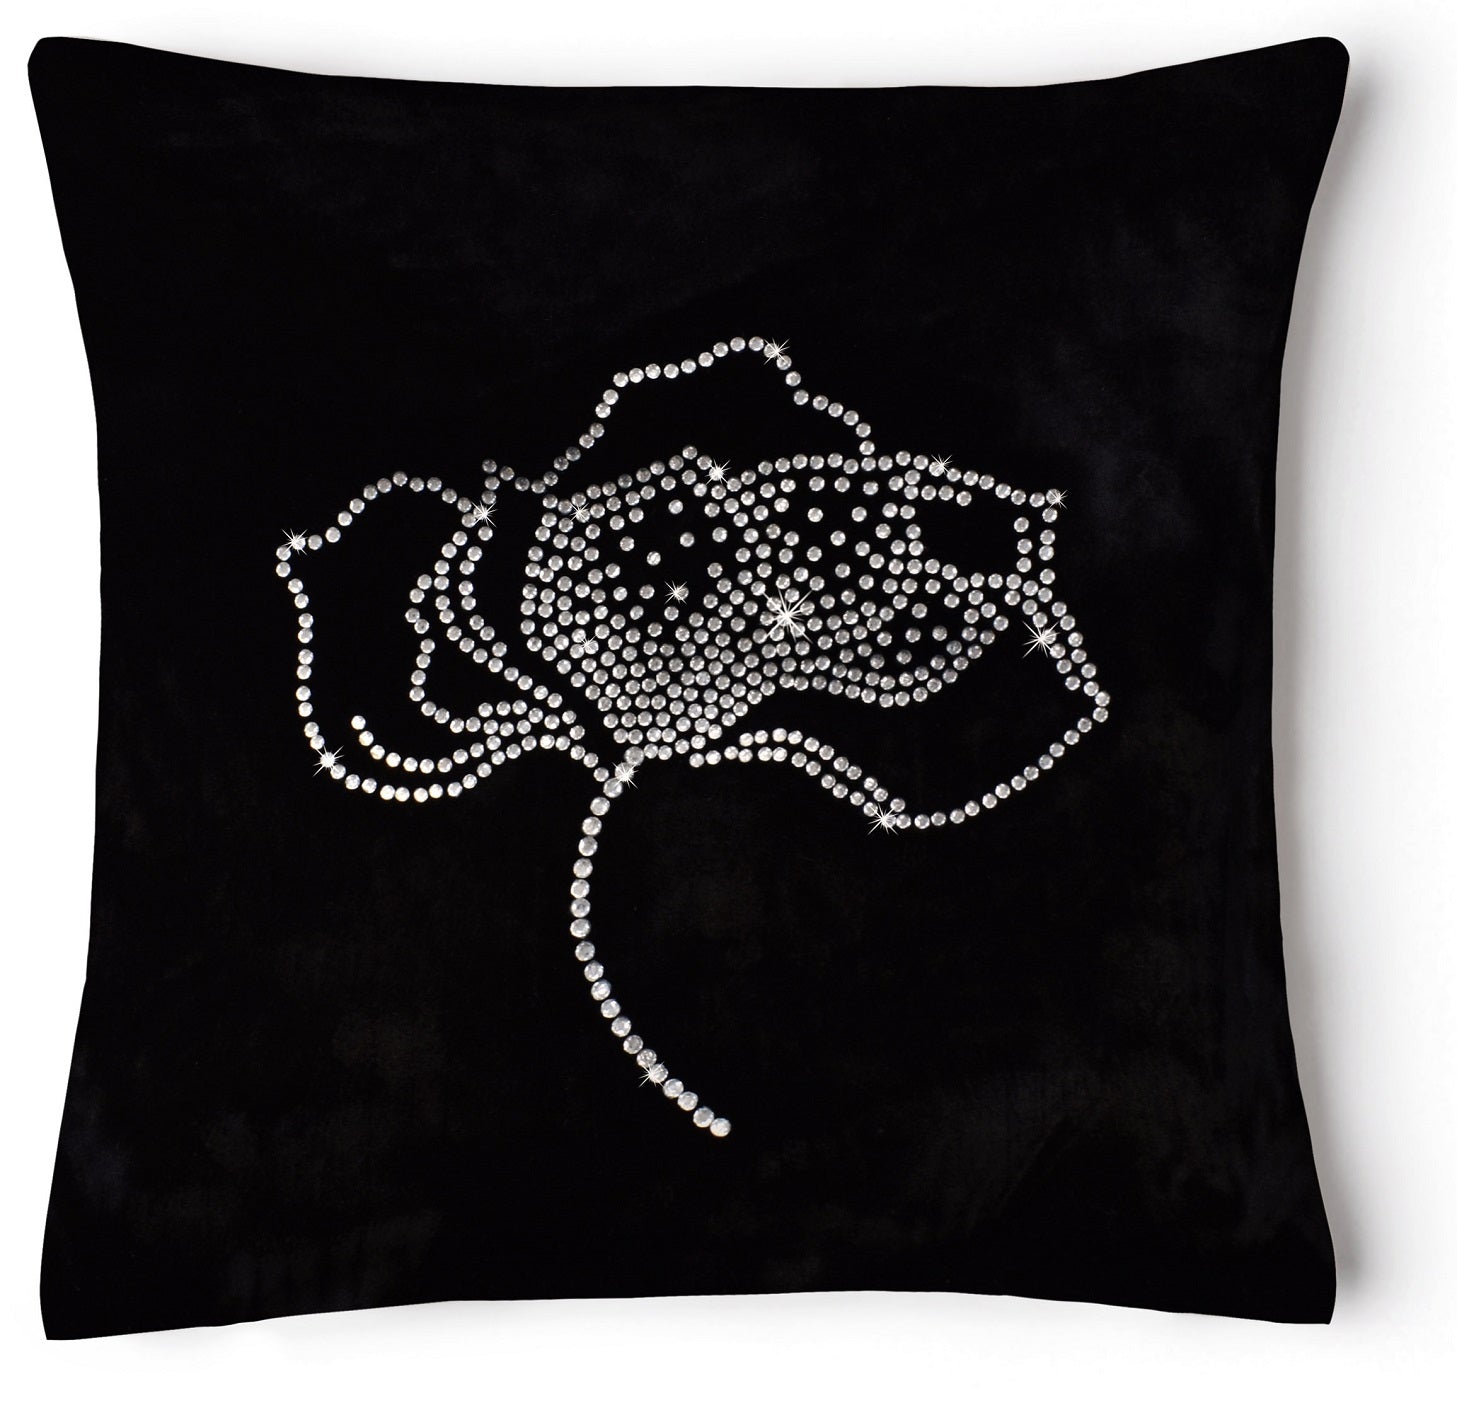 Luxury Velvet Diamante Rose Cushion Cover 43x43cm - Black